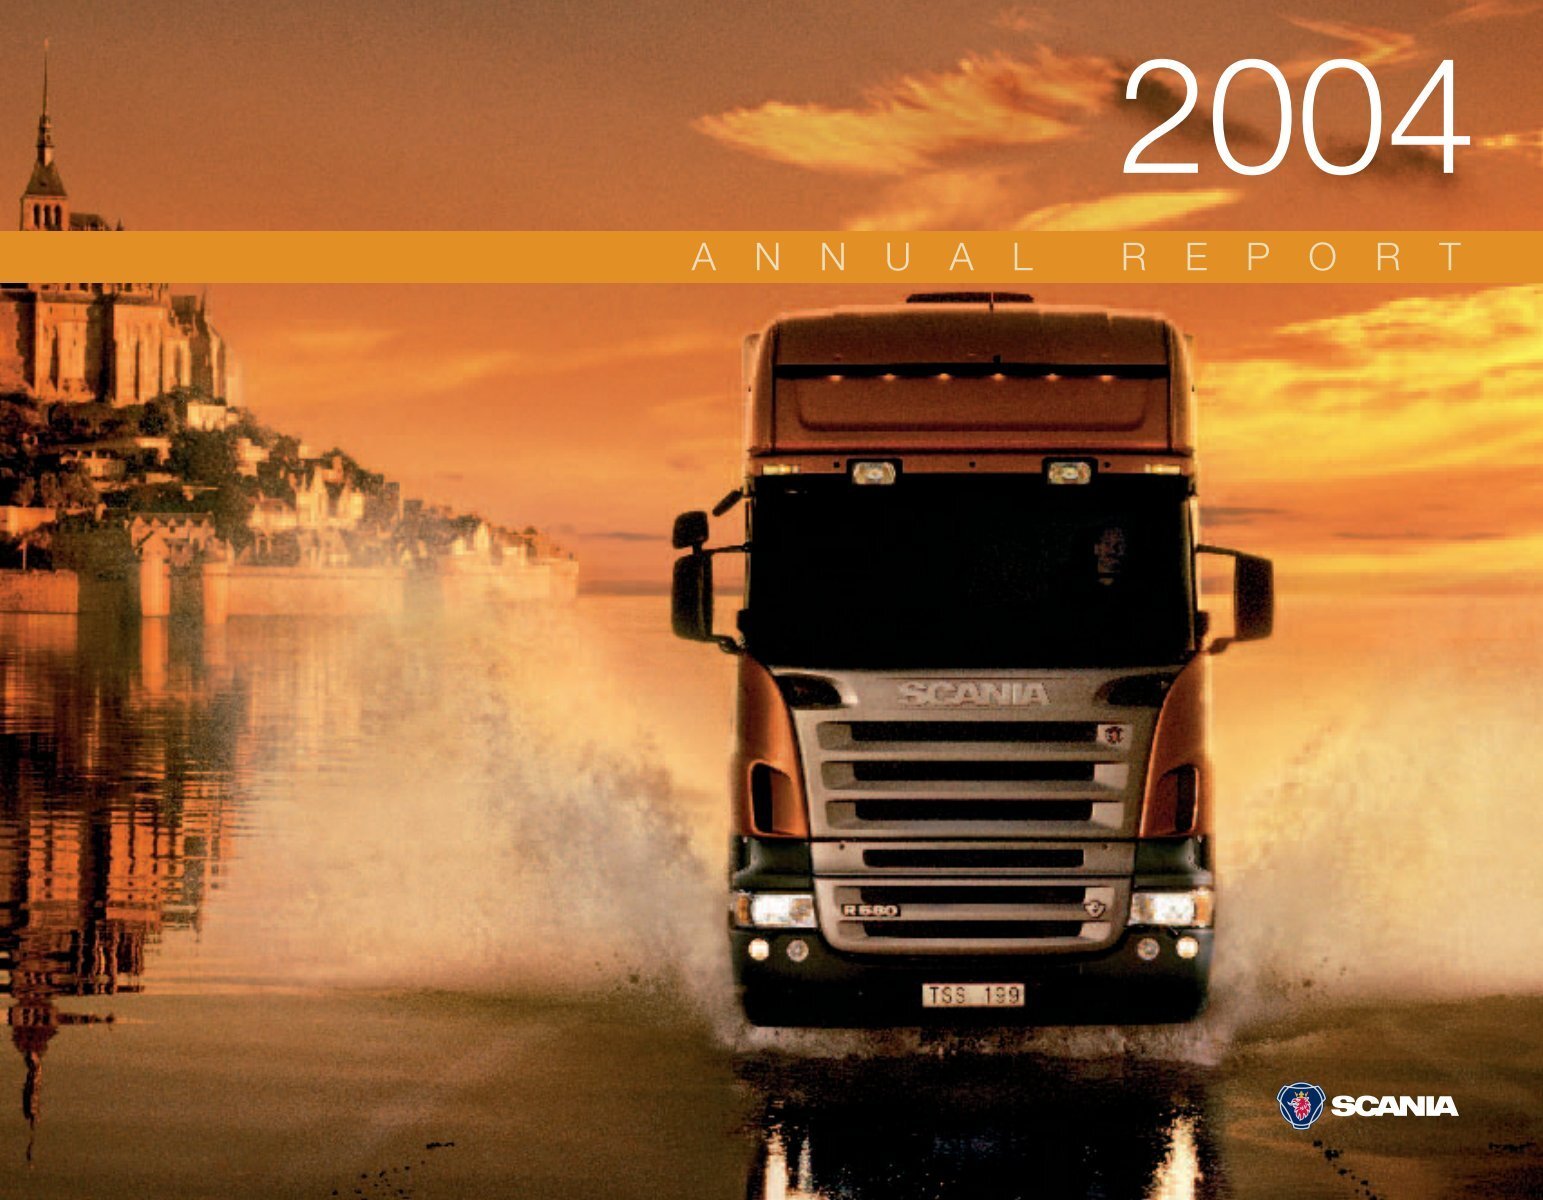 Scania annual report 2004